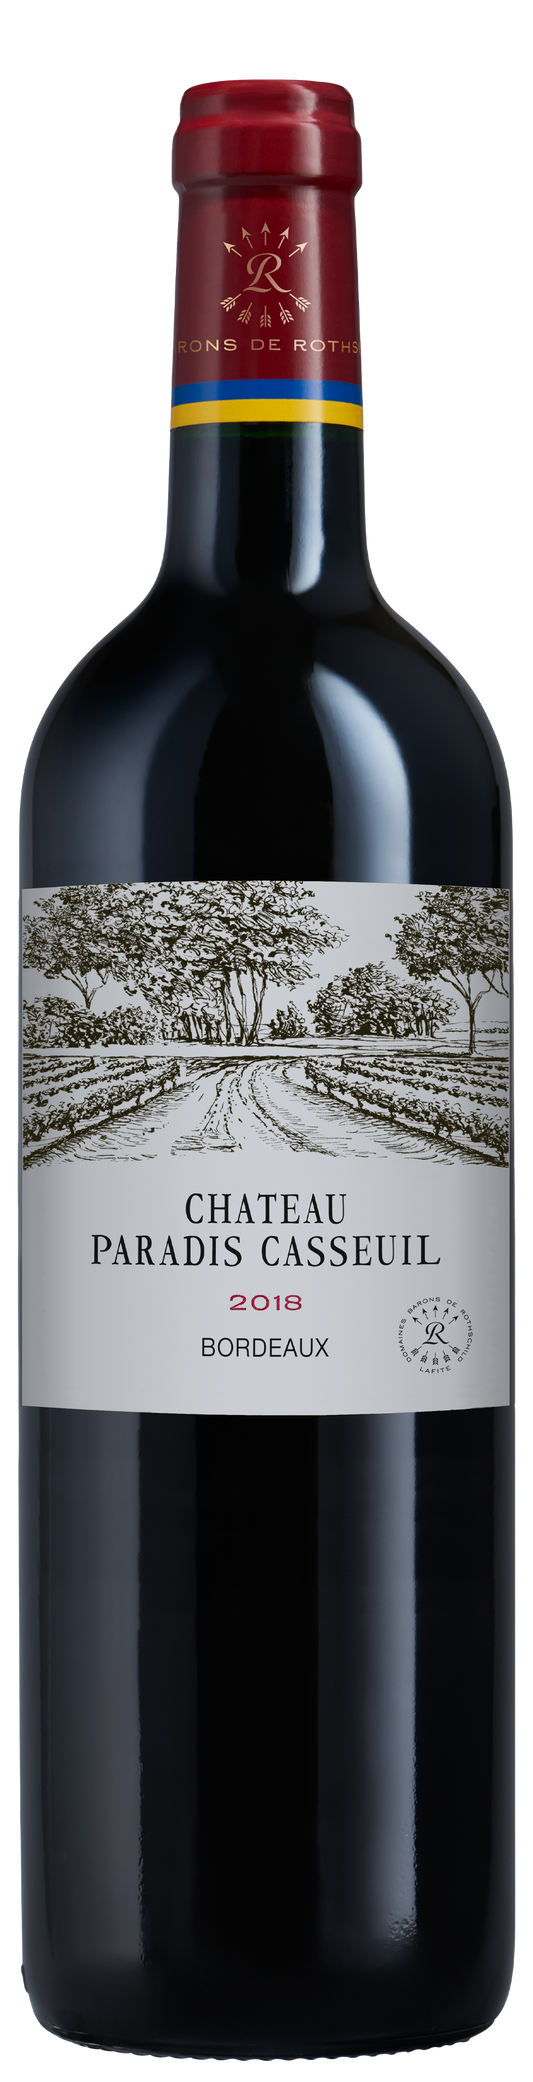 Château Paradis Casseuil 2018